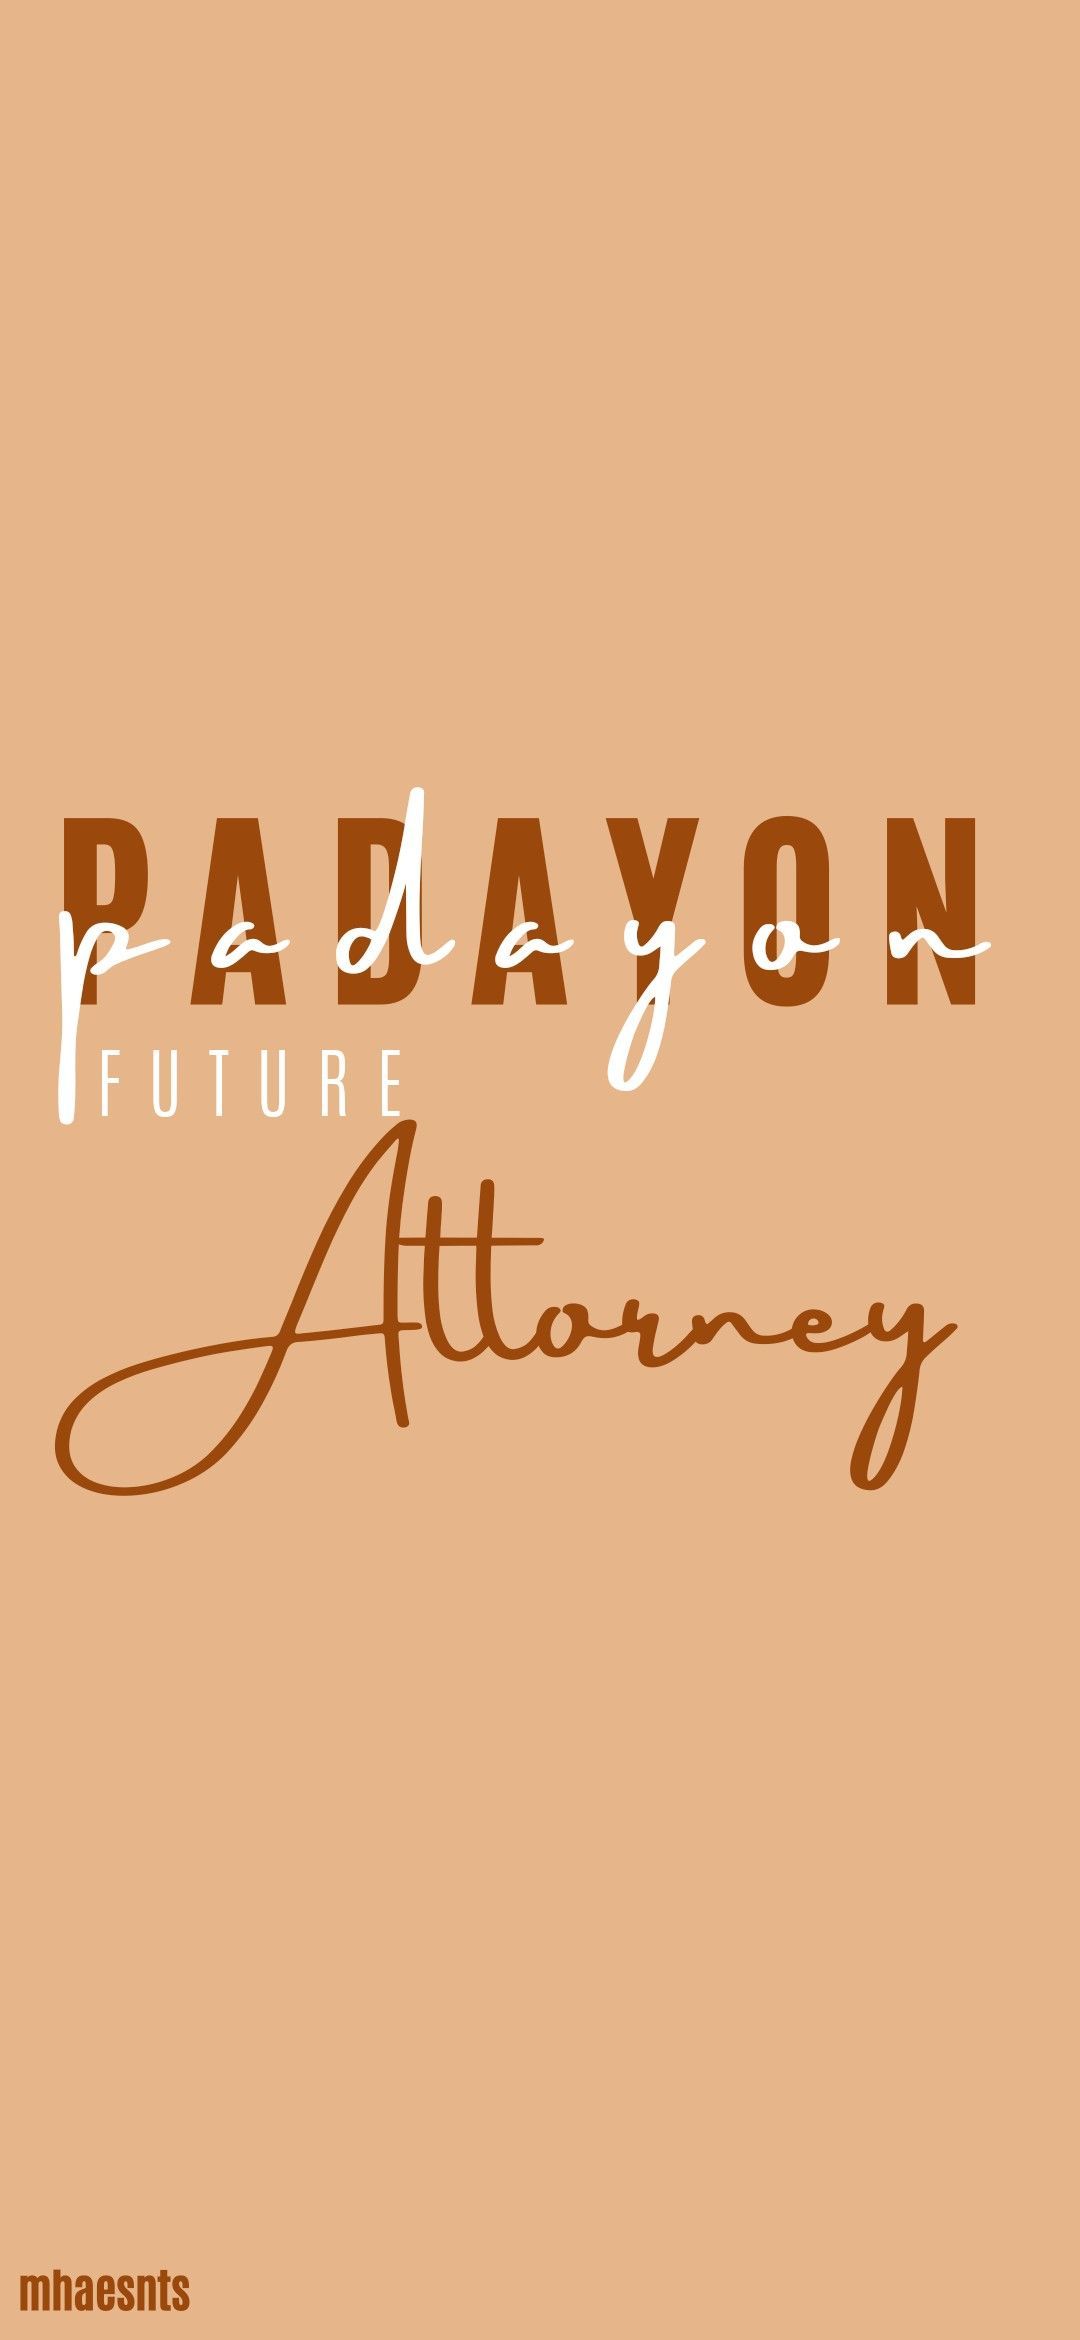 Padayon!!! Future Attorney. Future wallpaper, Teacher wallpaper, Law school inspiration